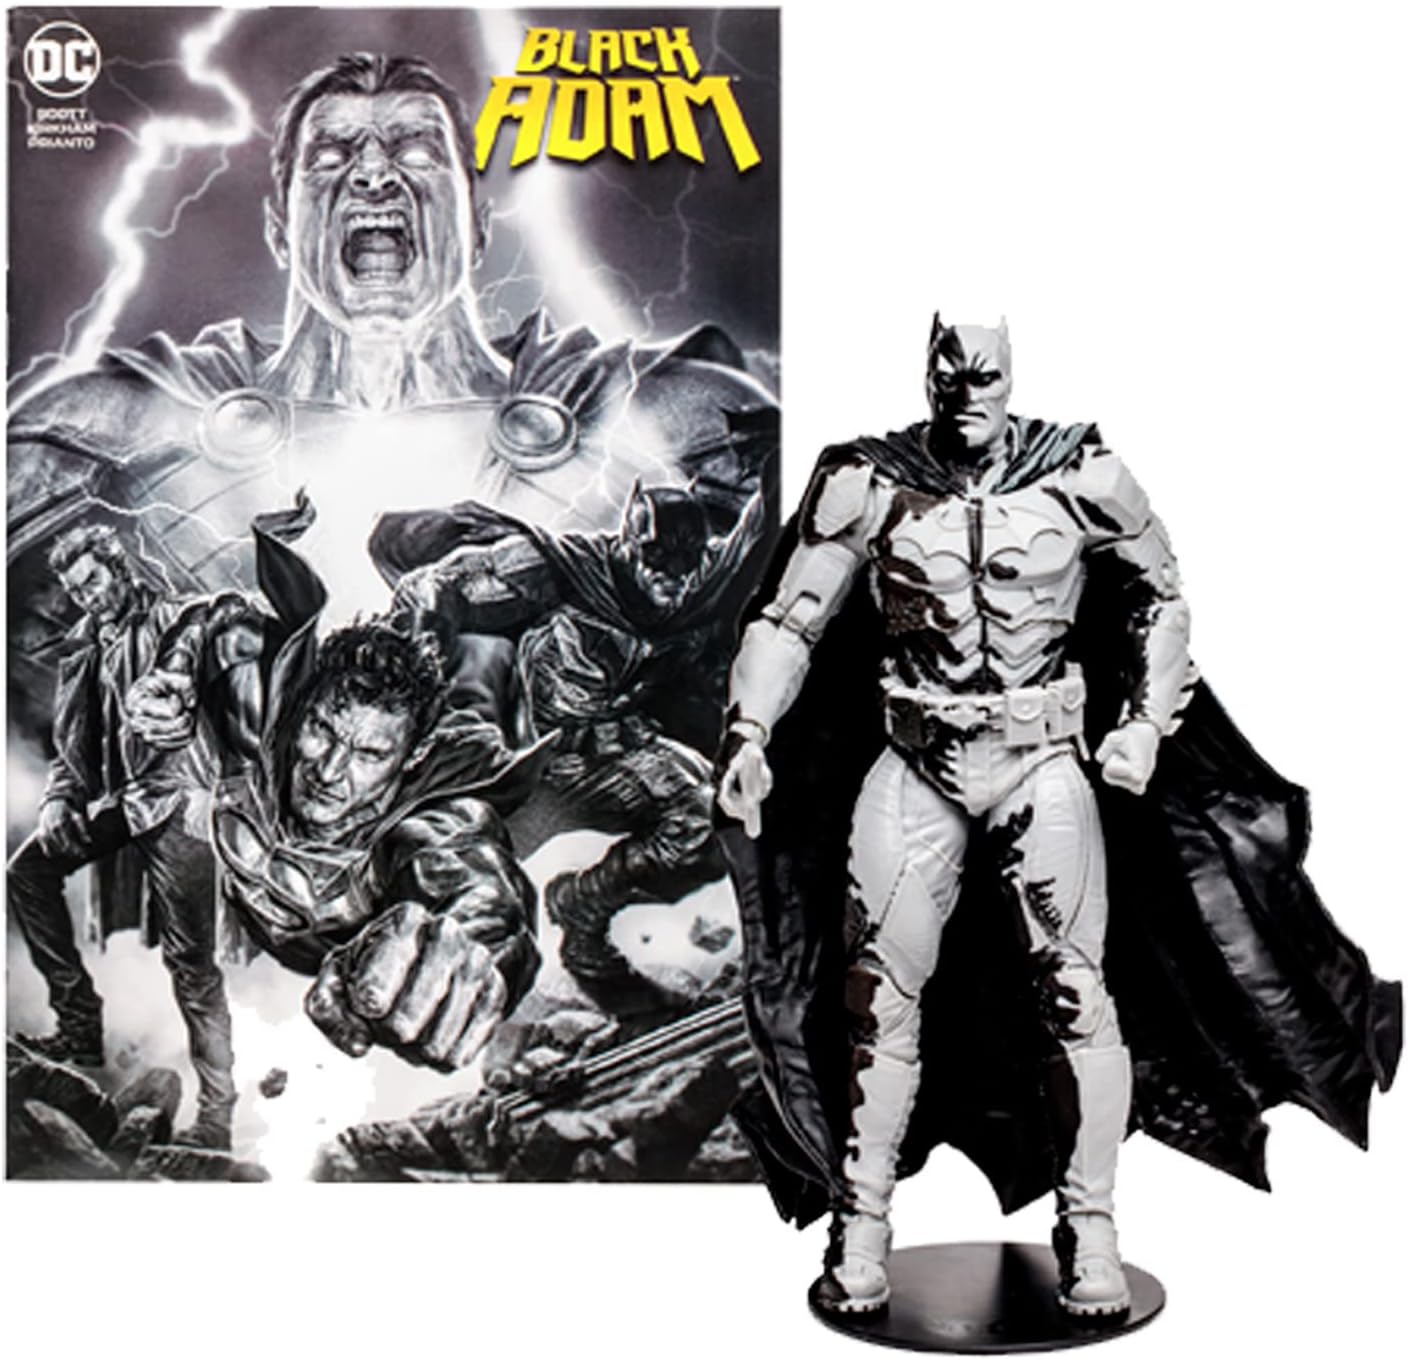 Mcfarlane Toys DC Direct - Batman (Line Art Variant) Gold Label 7 Inch Action Figure with Comic - Black Adam